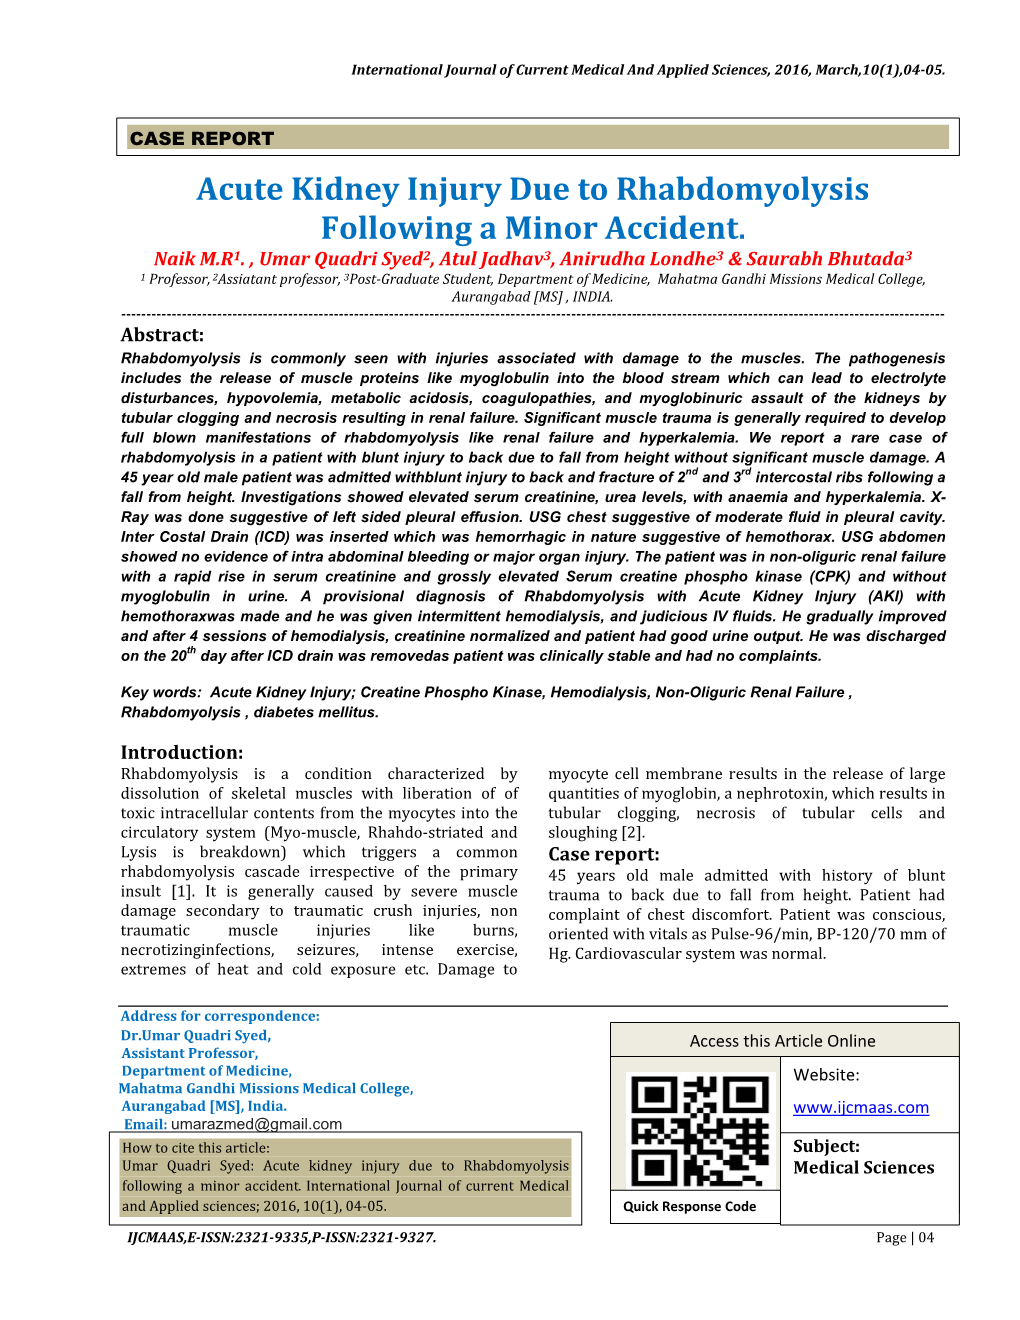 Acute Kidney Injury Due to Rhabdomyolysis Following a Minor Accident